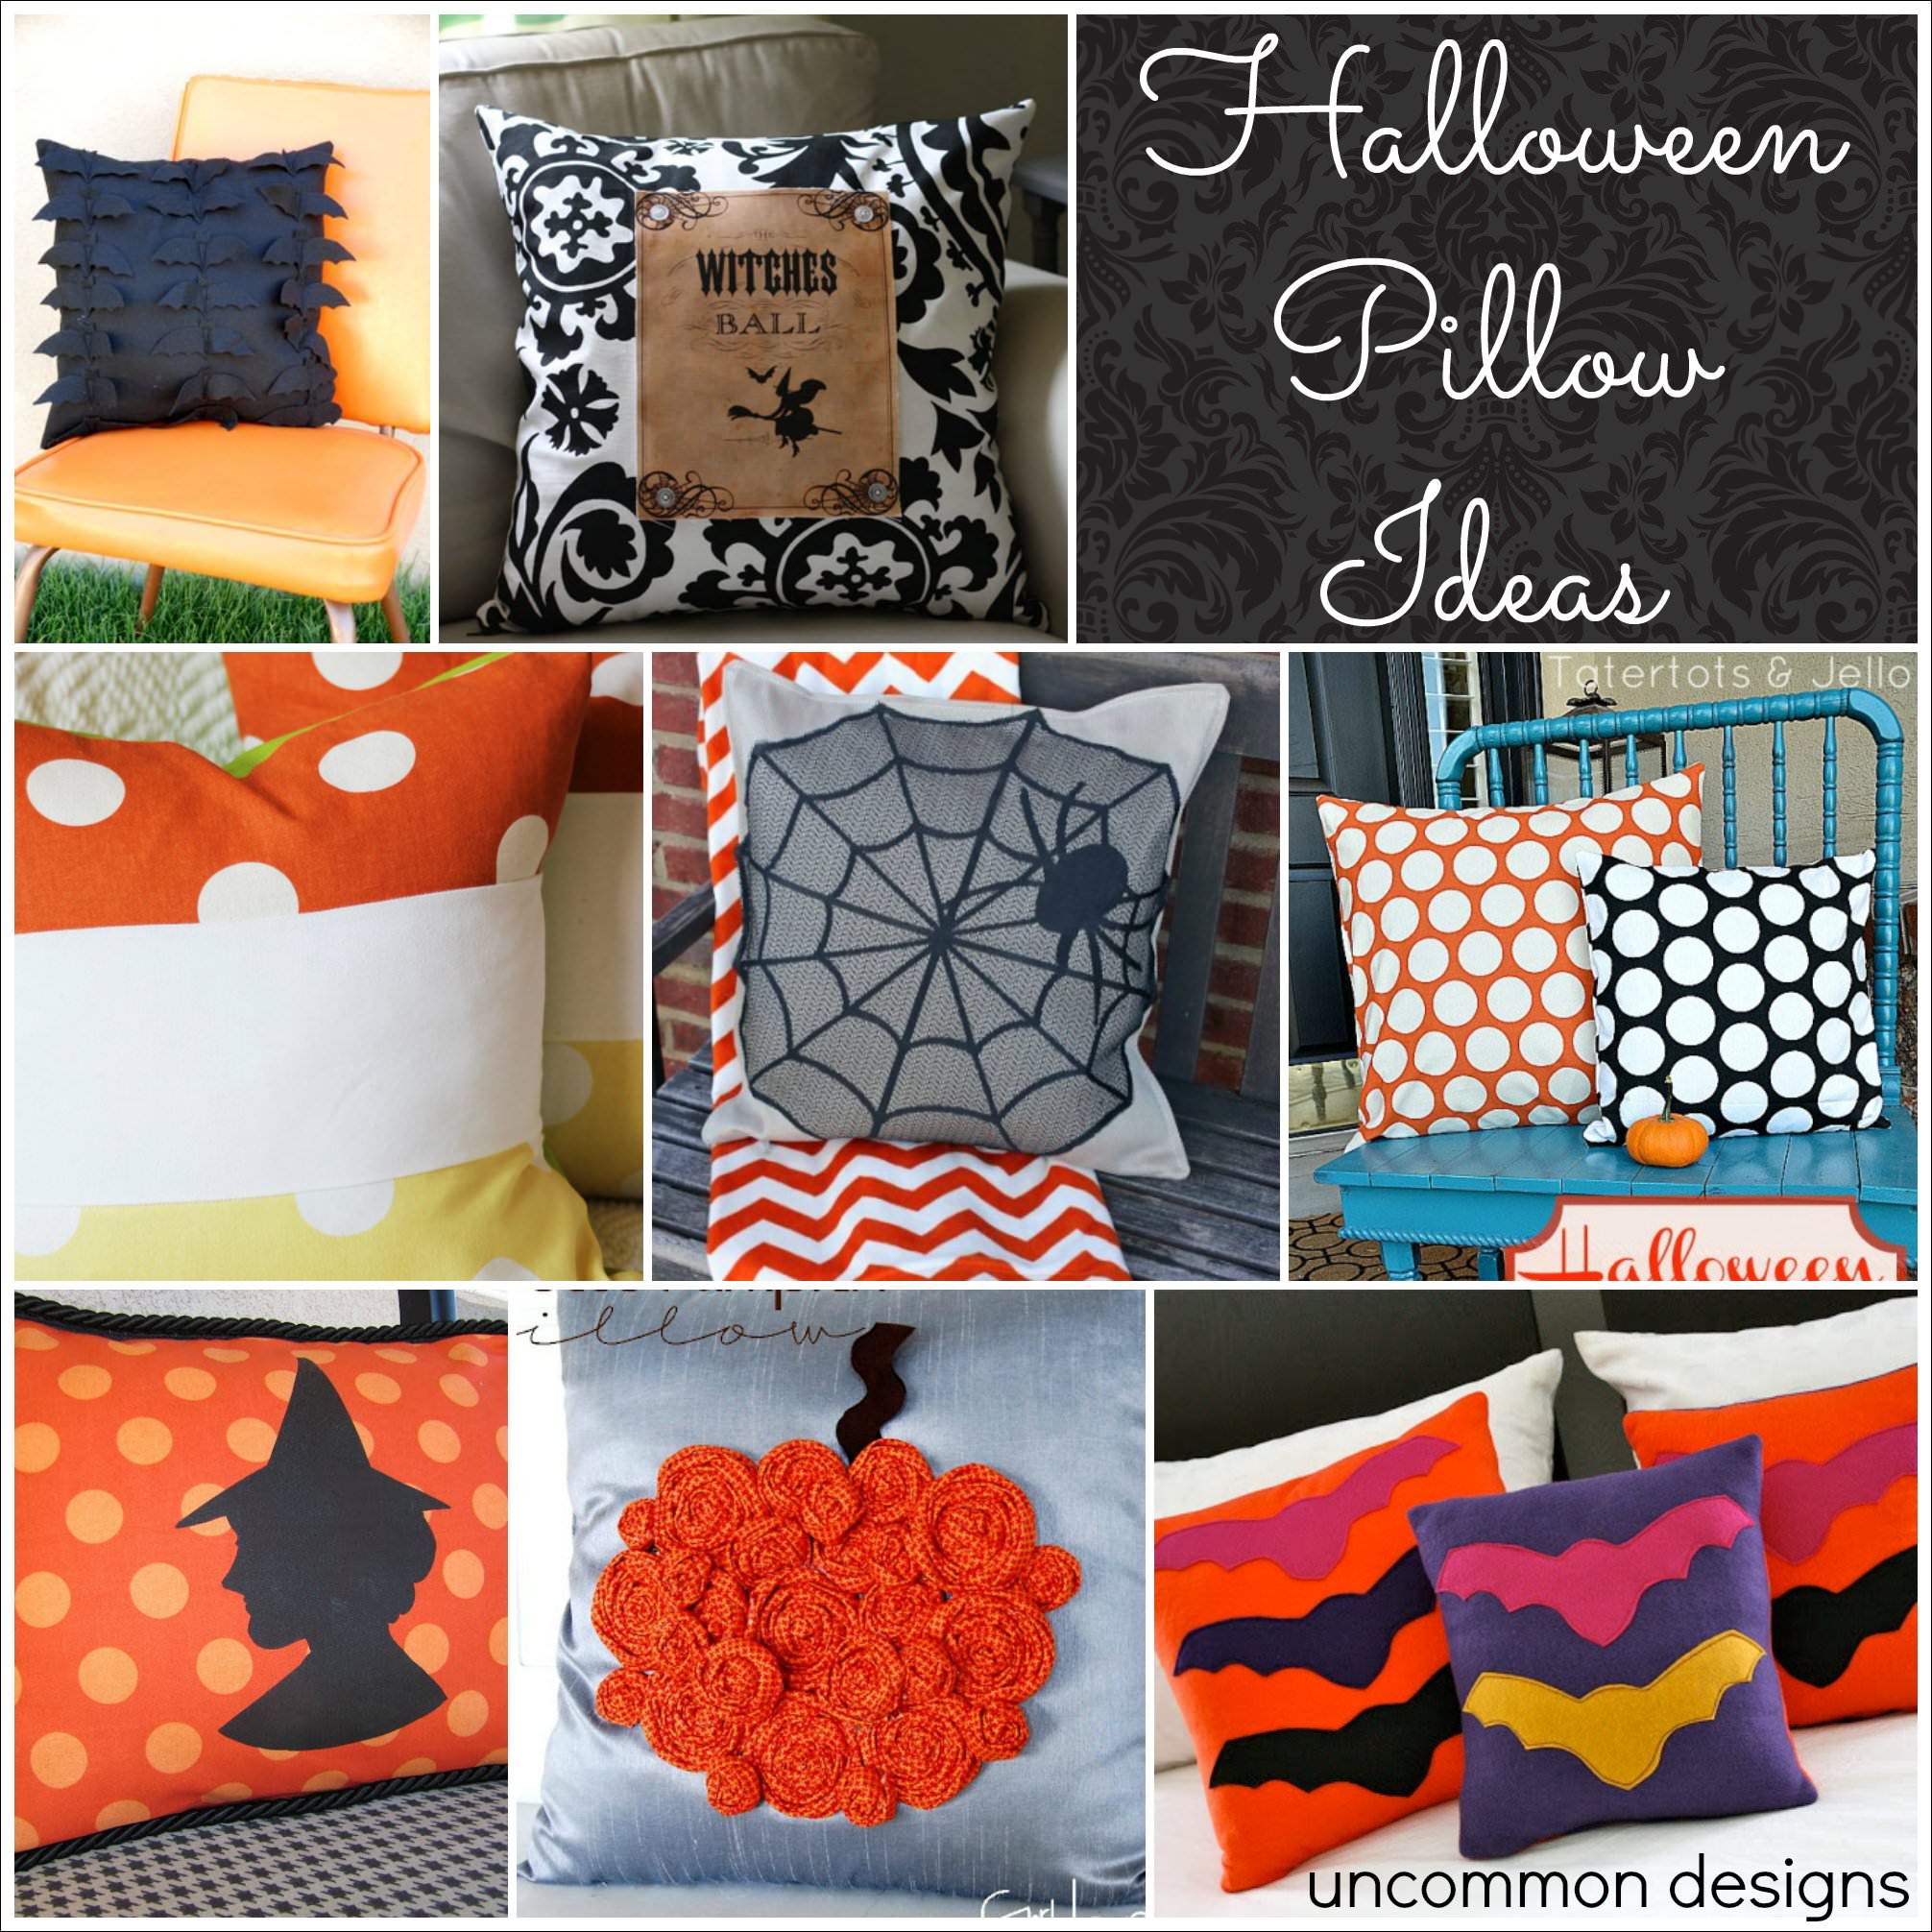 https://uncommondesignsonline.com/wp-content/uploads/2013/09/Halloween-pillow-ideas.jpg